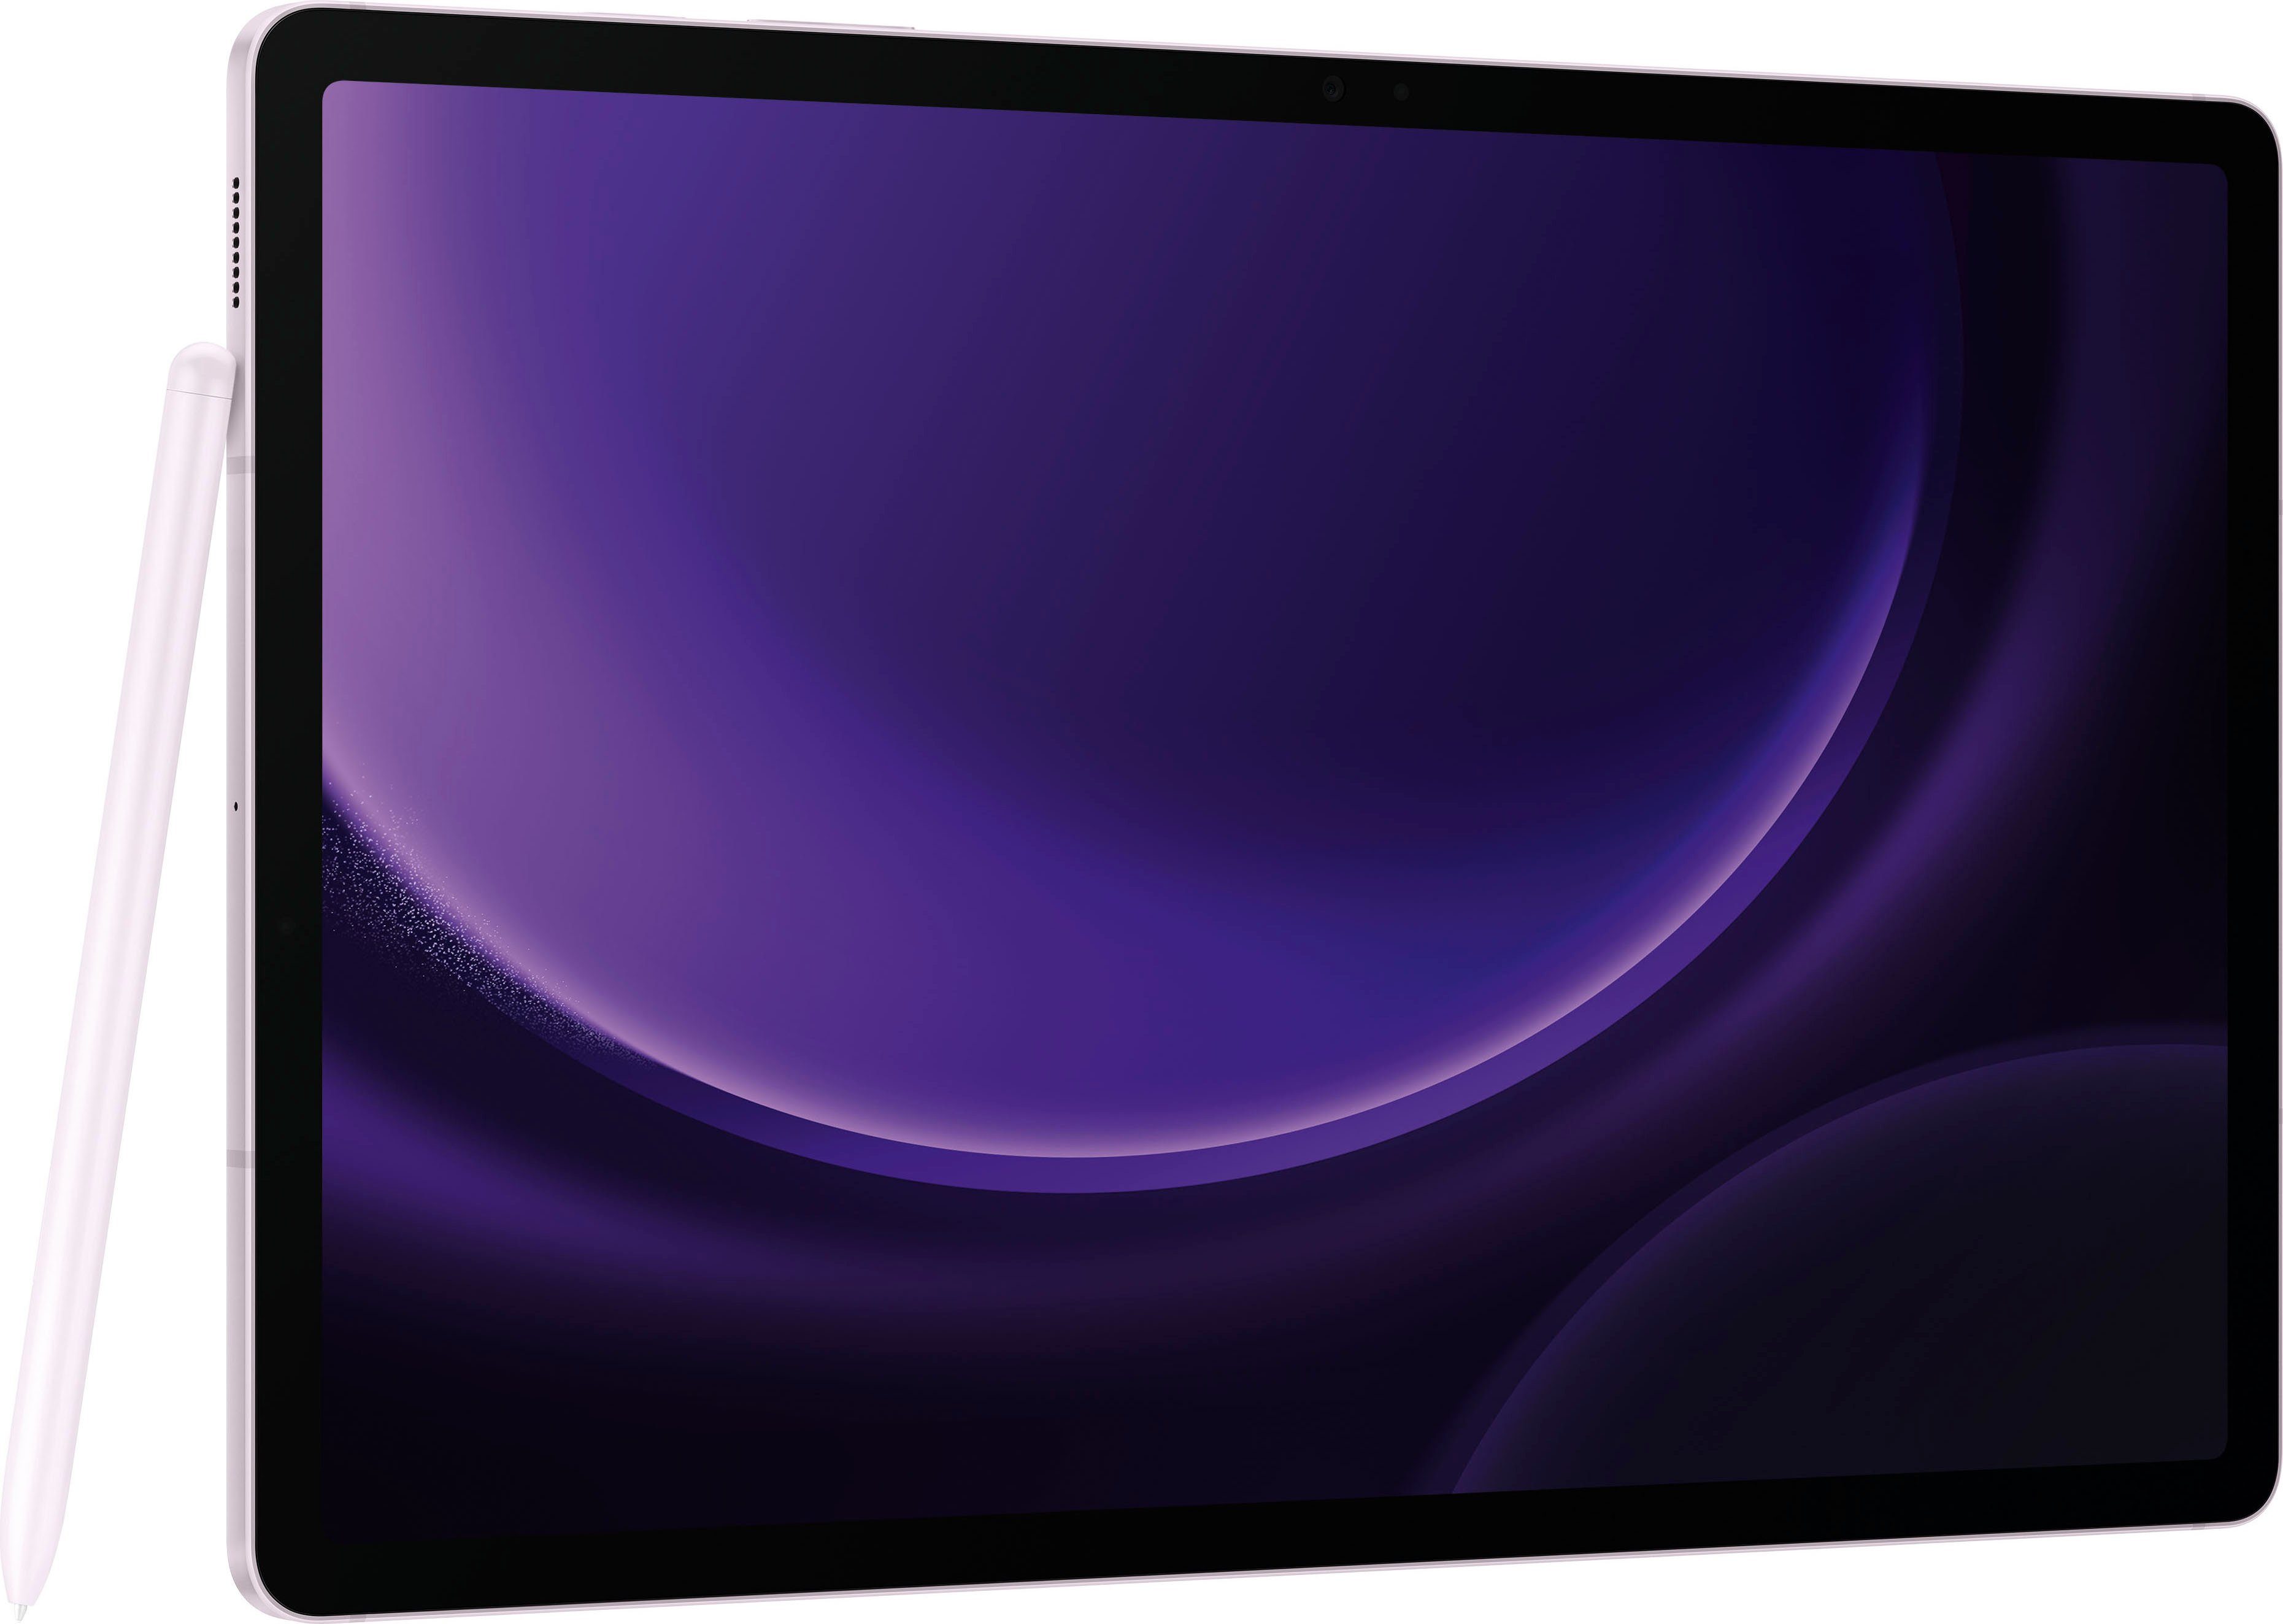 S9 Galaxy 128 Lavender 5G) FE+ UI,Knox, Tab Android,One Tablet Samsung (12,4", 5G GB,